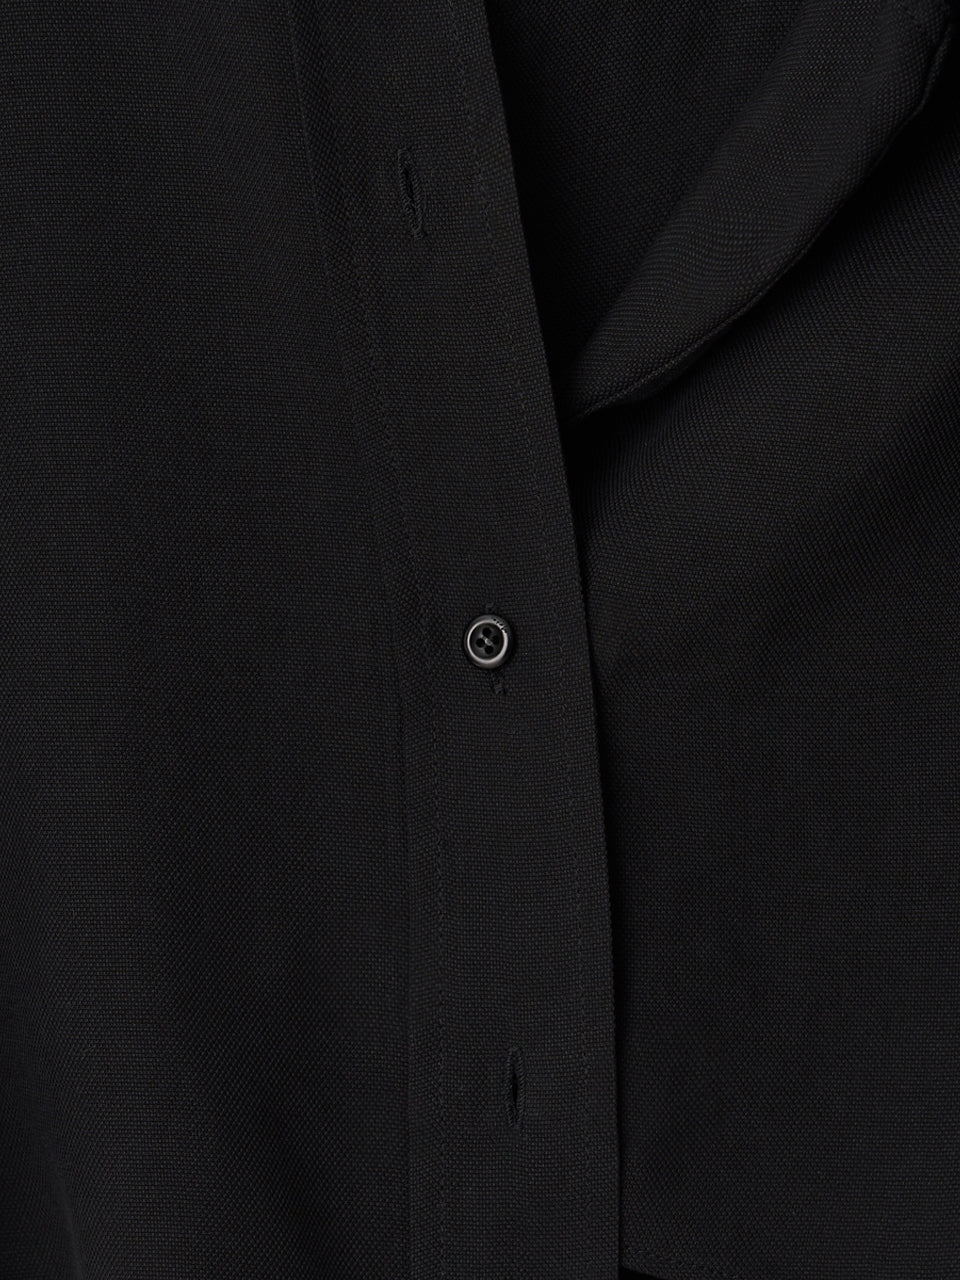 Tencel Shirt (Black)